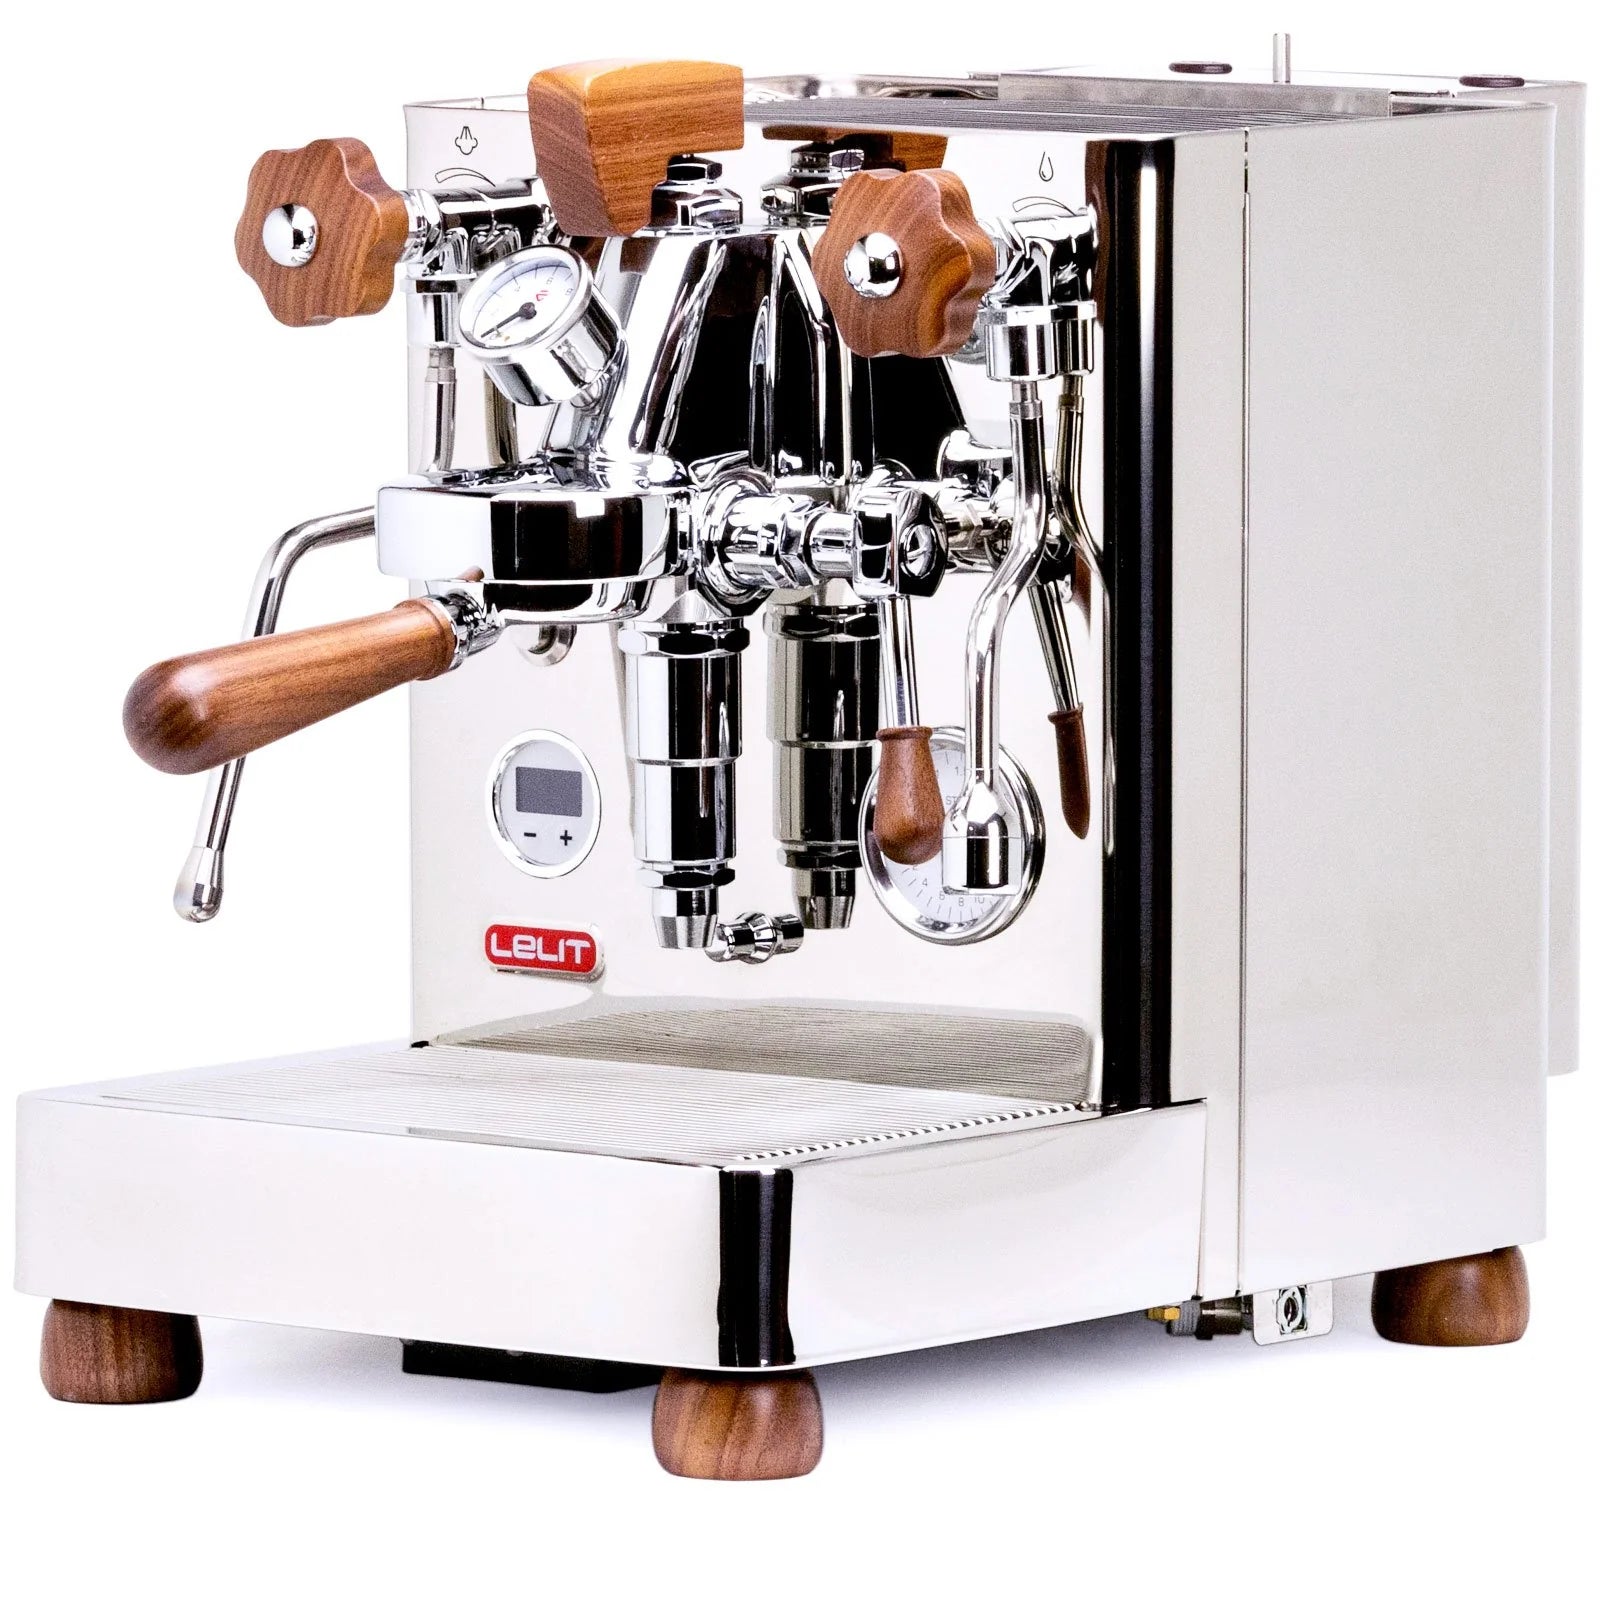  Lelit Espresso Machine